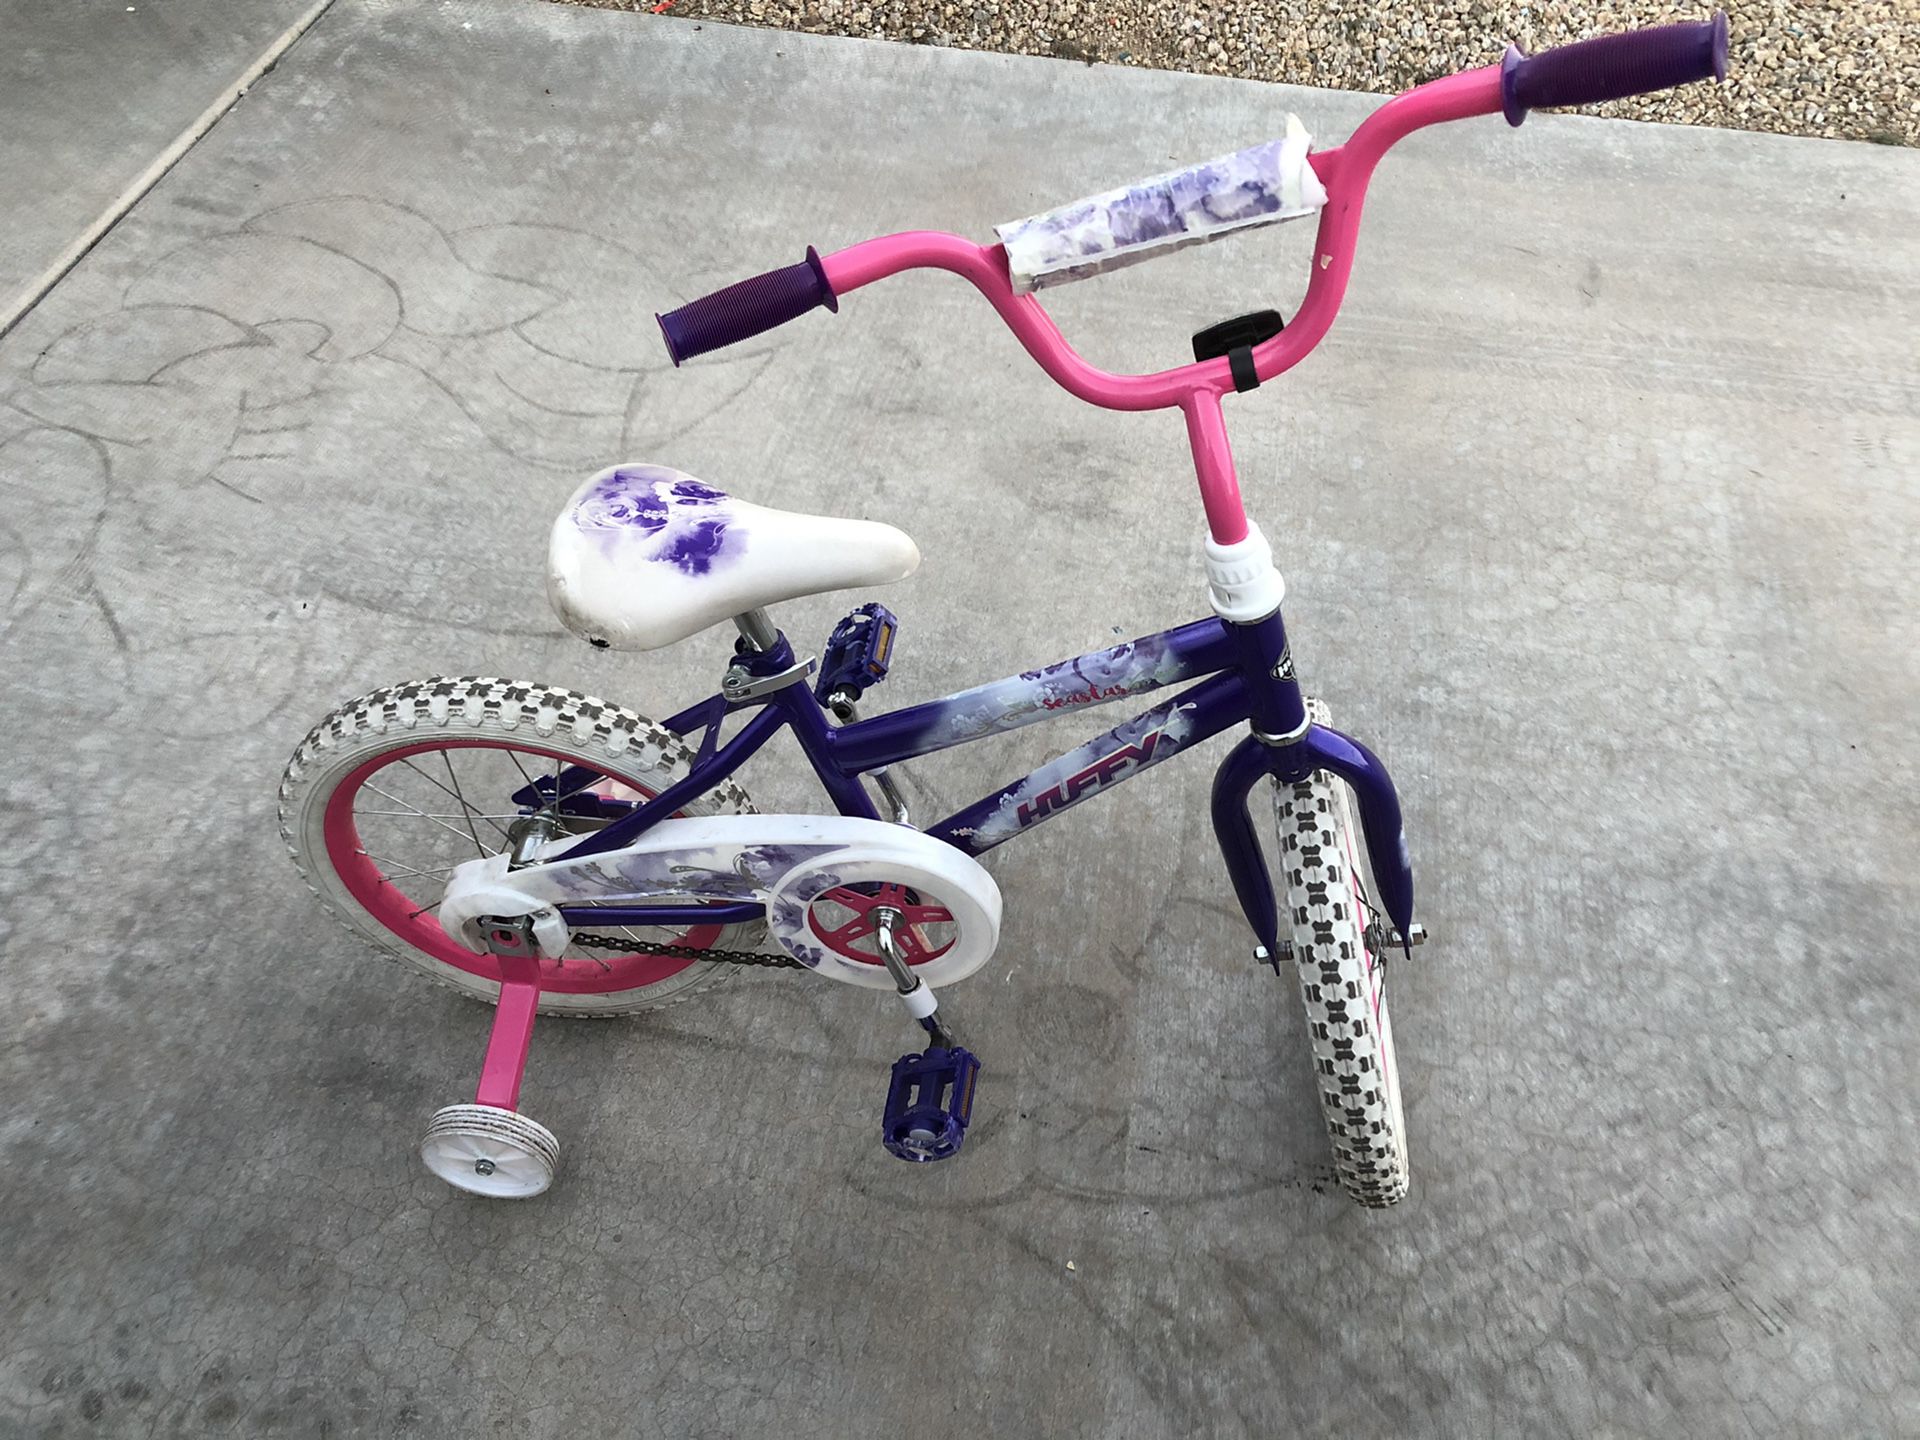 16” girls kids bike removable training wheels